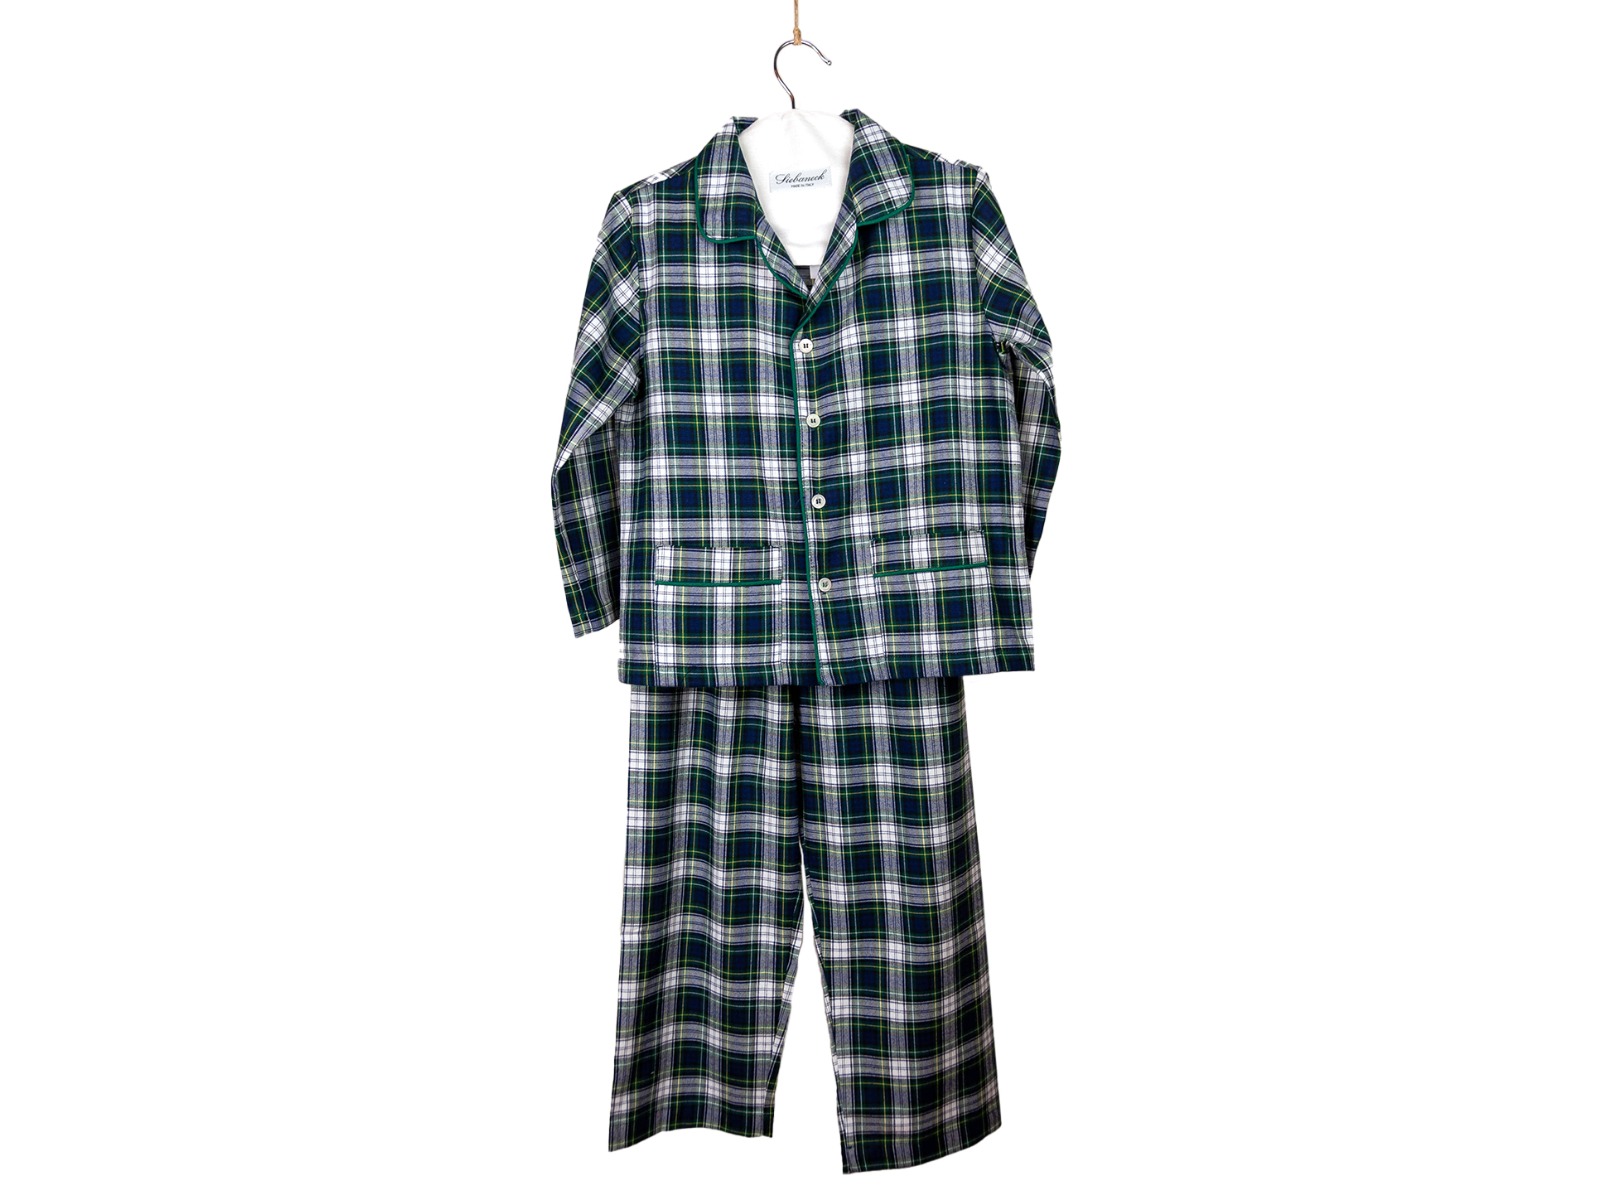 Siebaneck, i pigiami artigianali italiani: - unisex- mod.190 scozzese bianco blu verde profilo verde